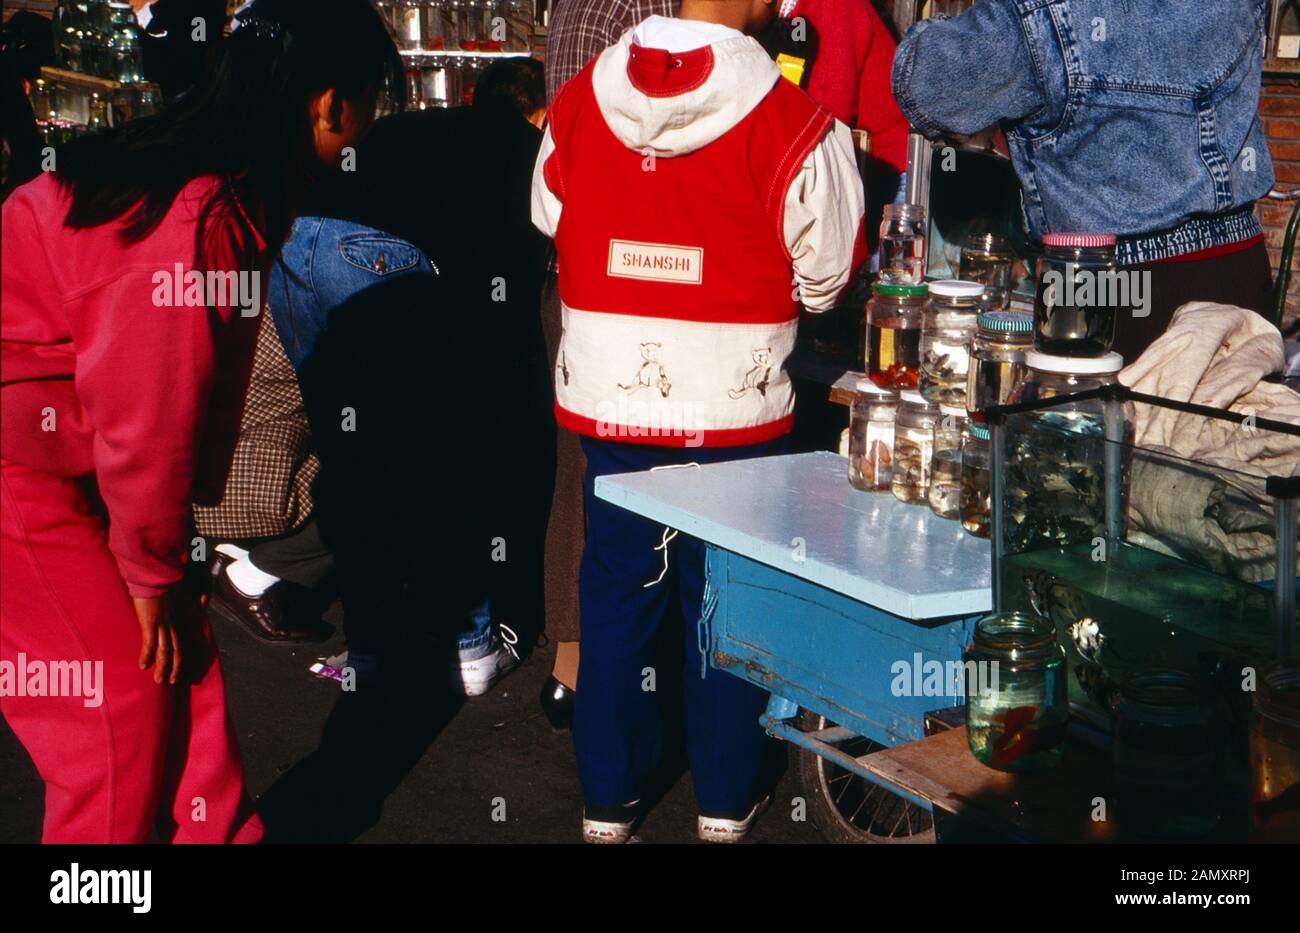 Offener Markt für Zierfische in einem Außenbezirk von Peking, China um 1990. Mercato aperto per i pesci ornamentali in una periferia di Pechino, Cina intorno al 1990. Foto Stock